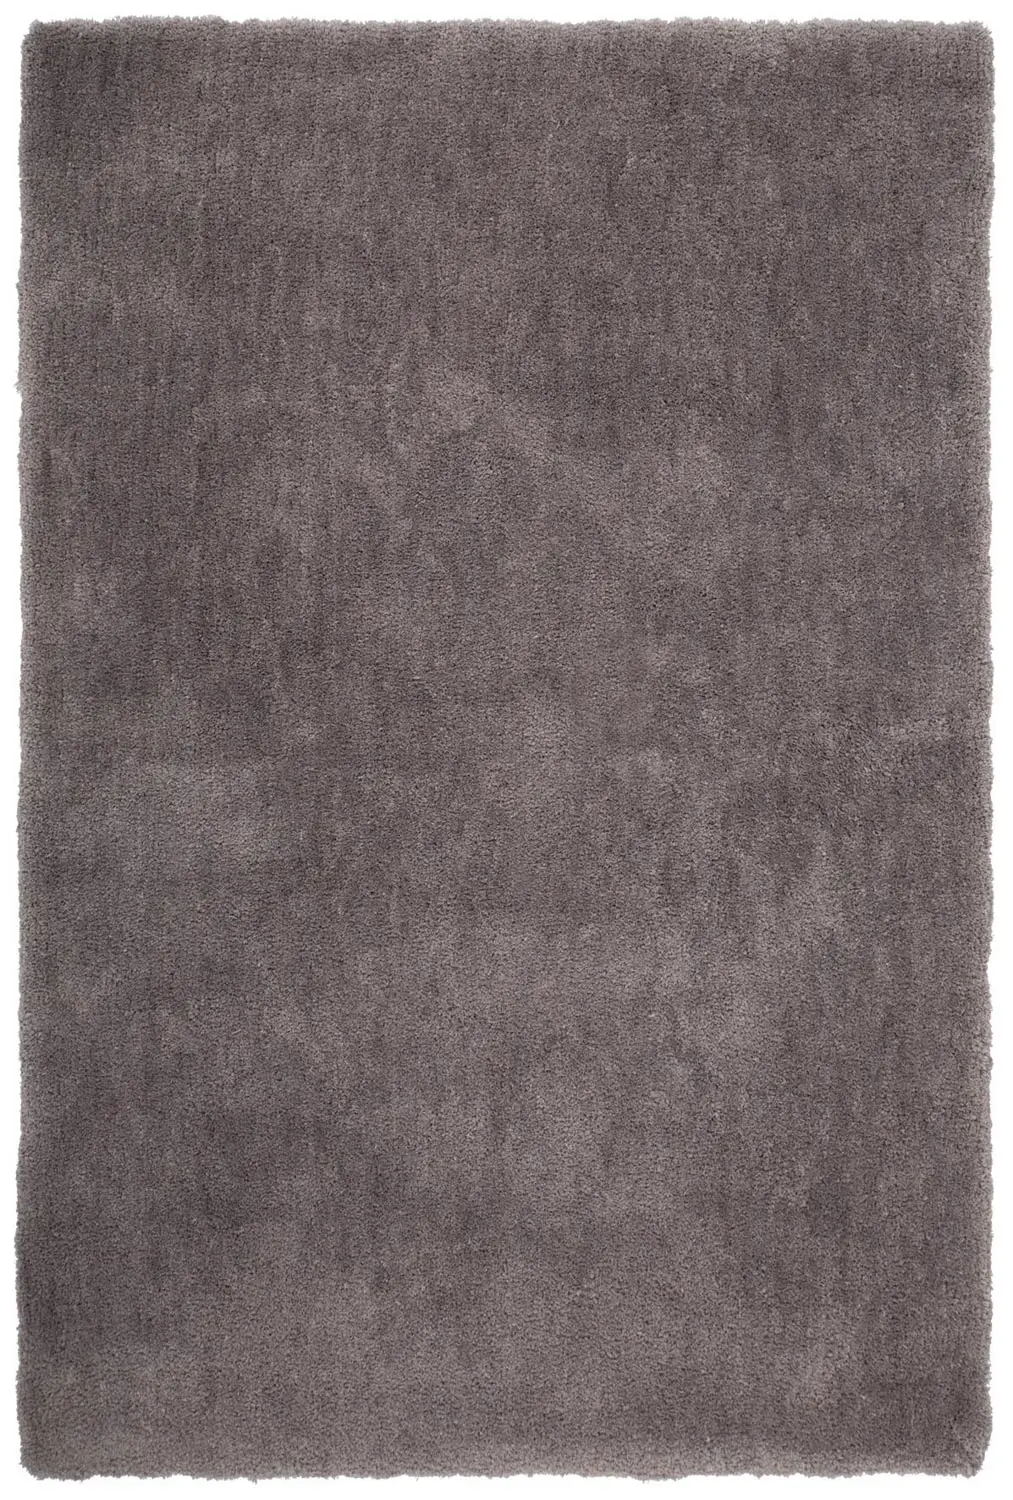 Hochflor Teppich - Giacinto - rechteckig